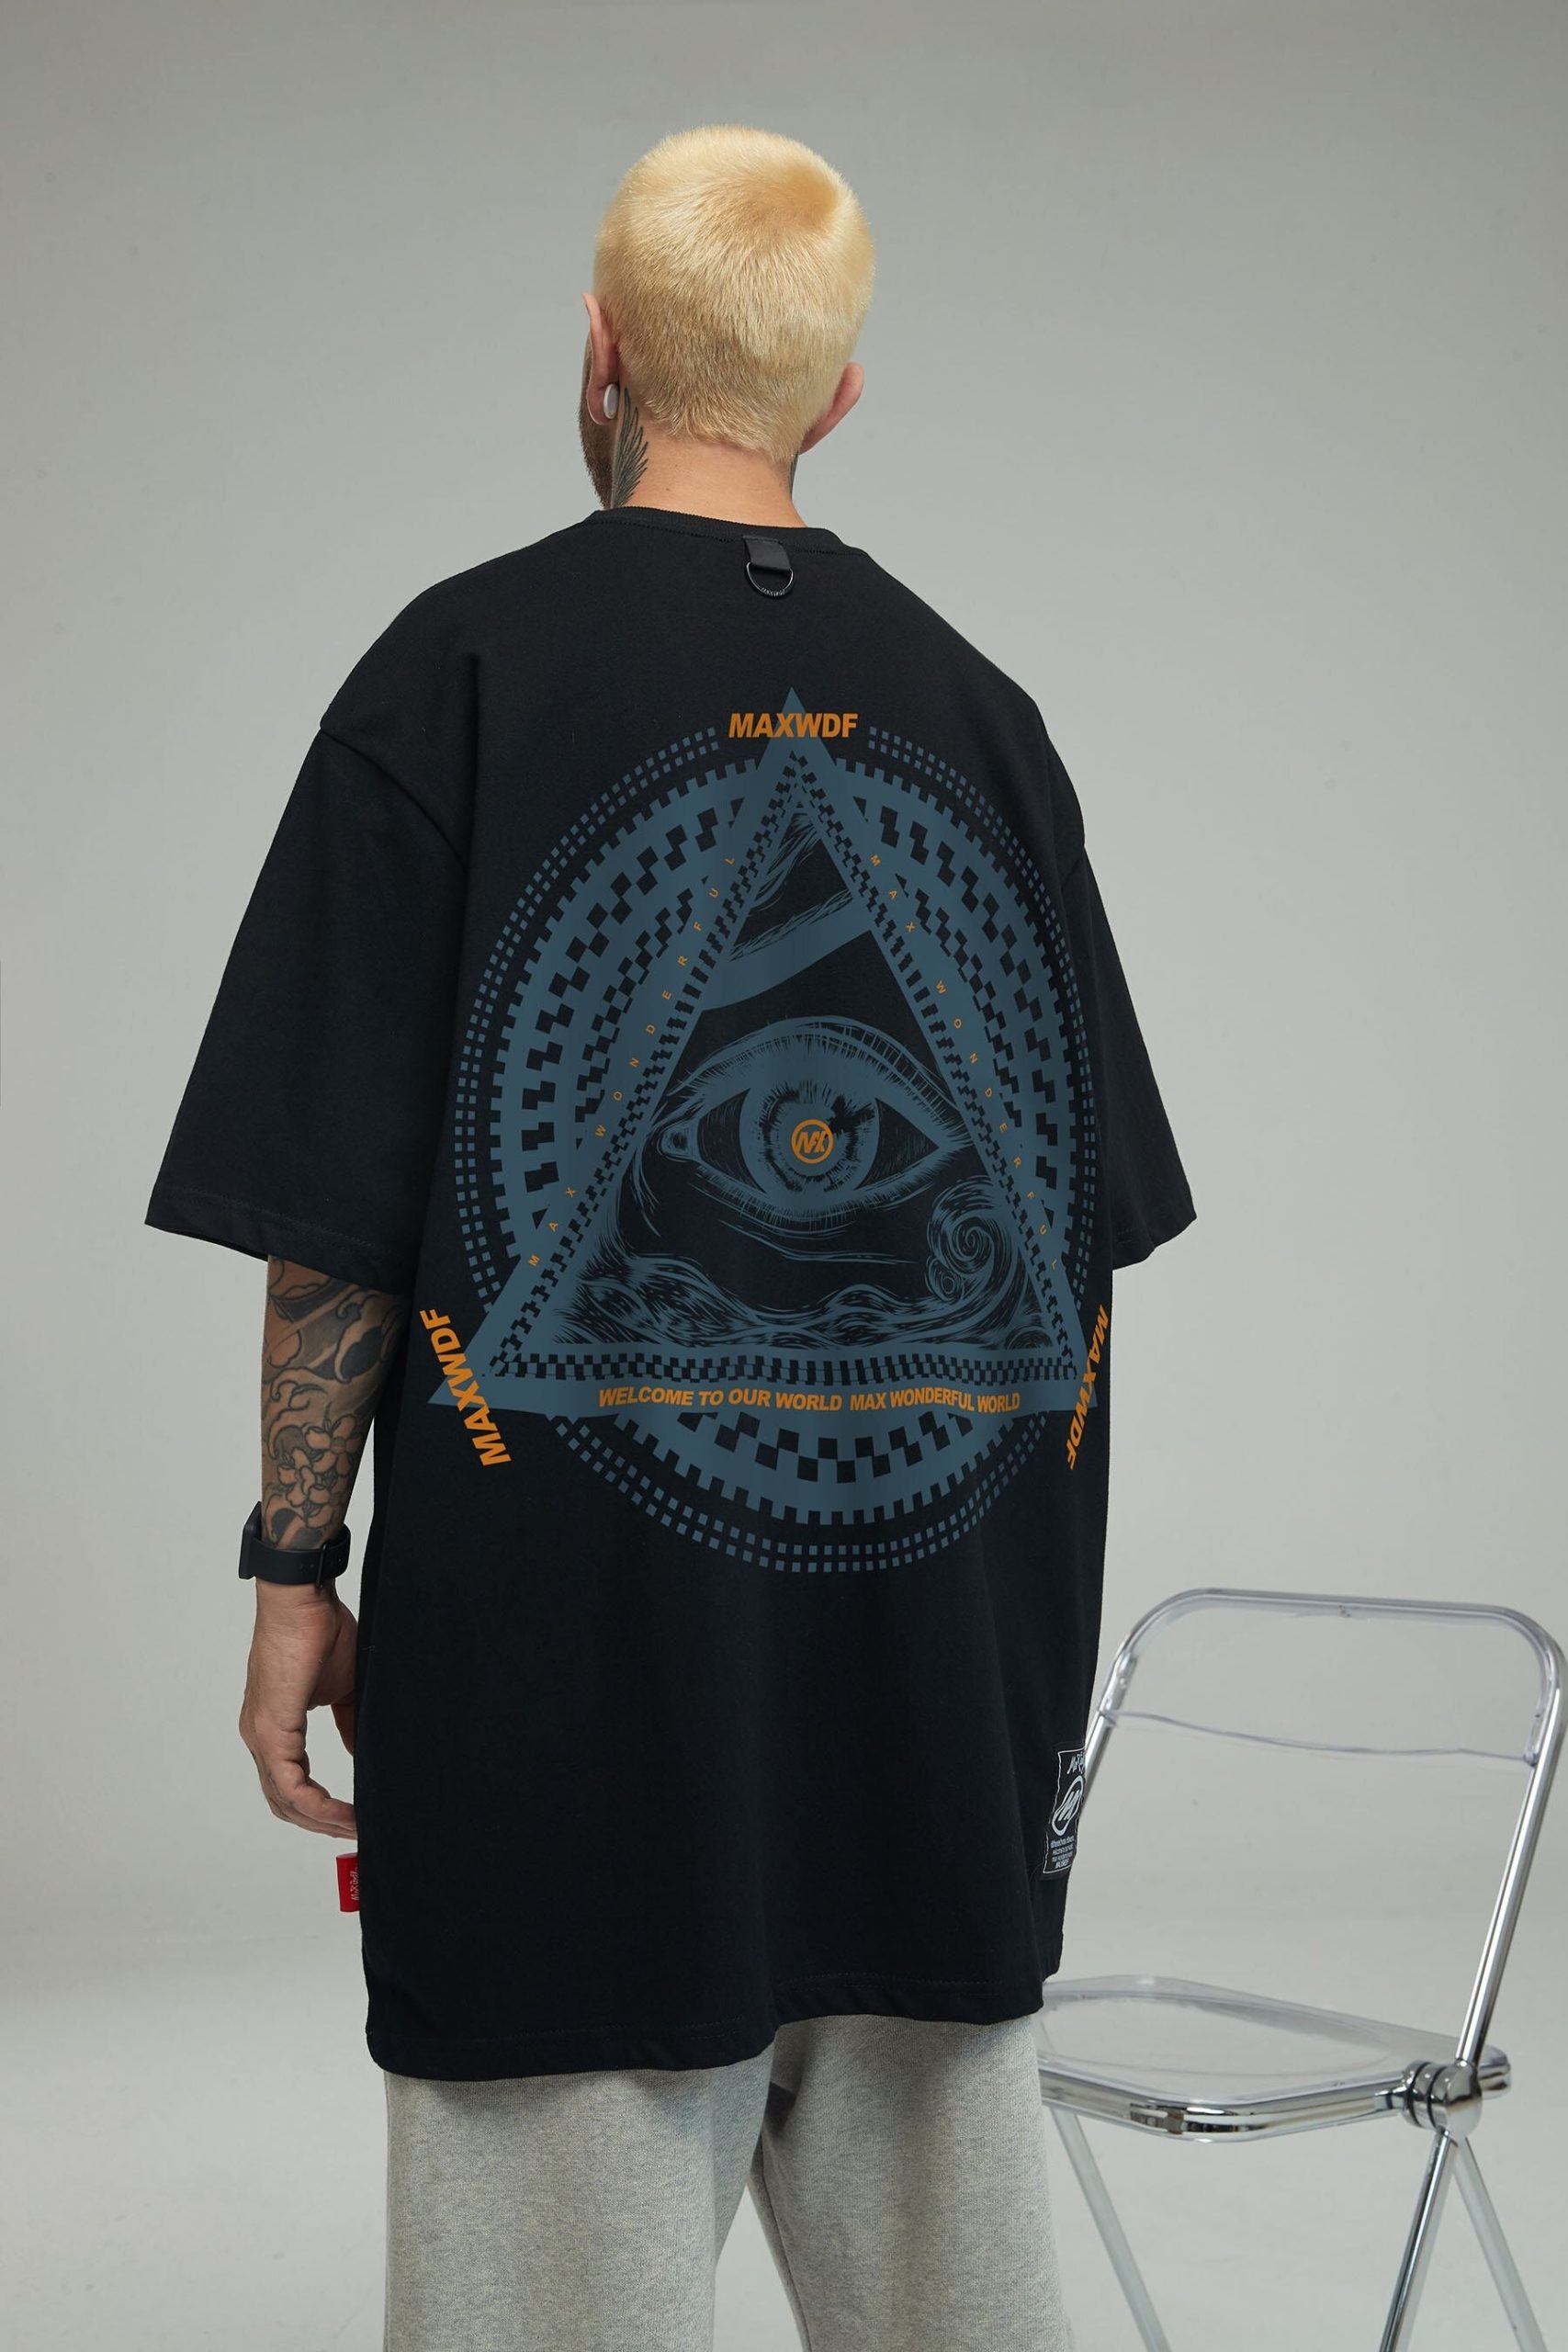 Summer Eye Of Providence Graphic T Shirt For Men Streetwear Fashion Black Short Sleeves Tees